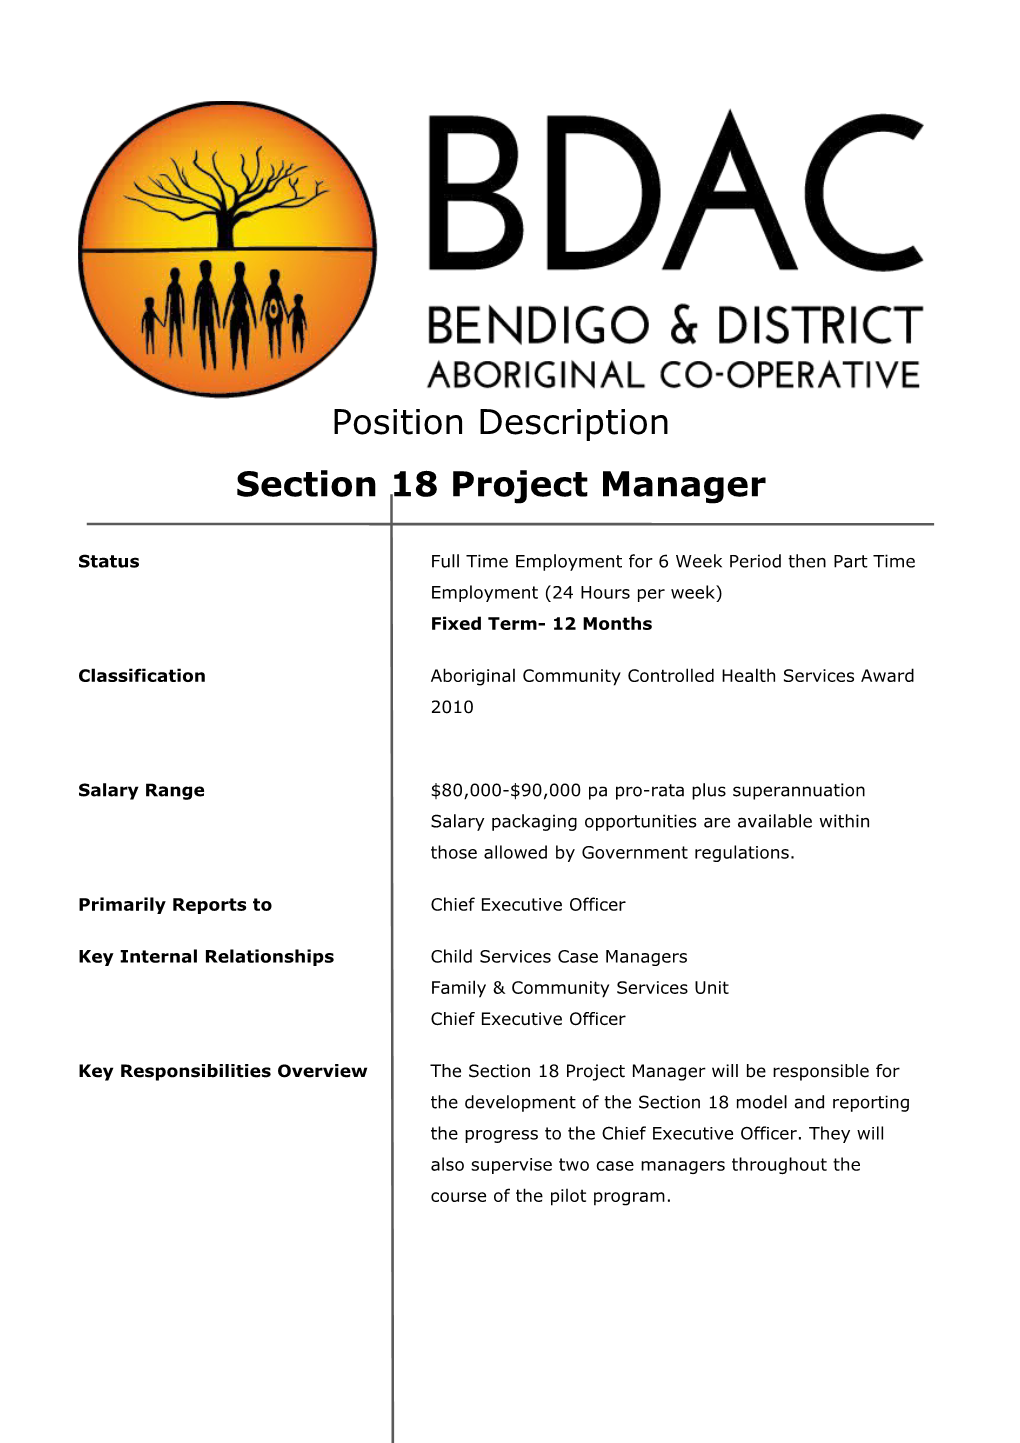 The Bendigo & District Aboriginal